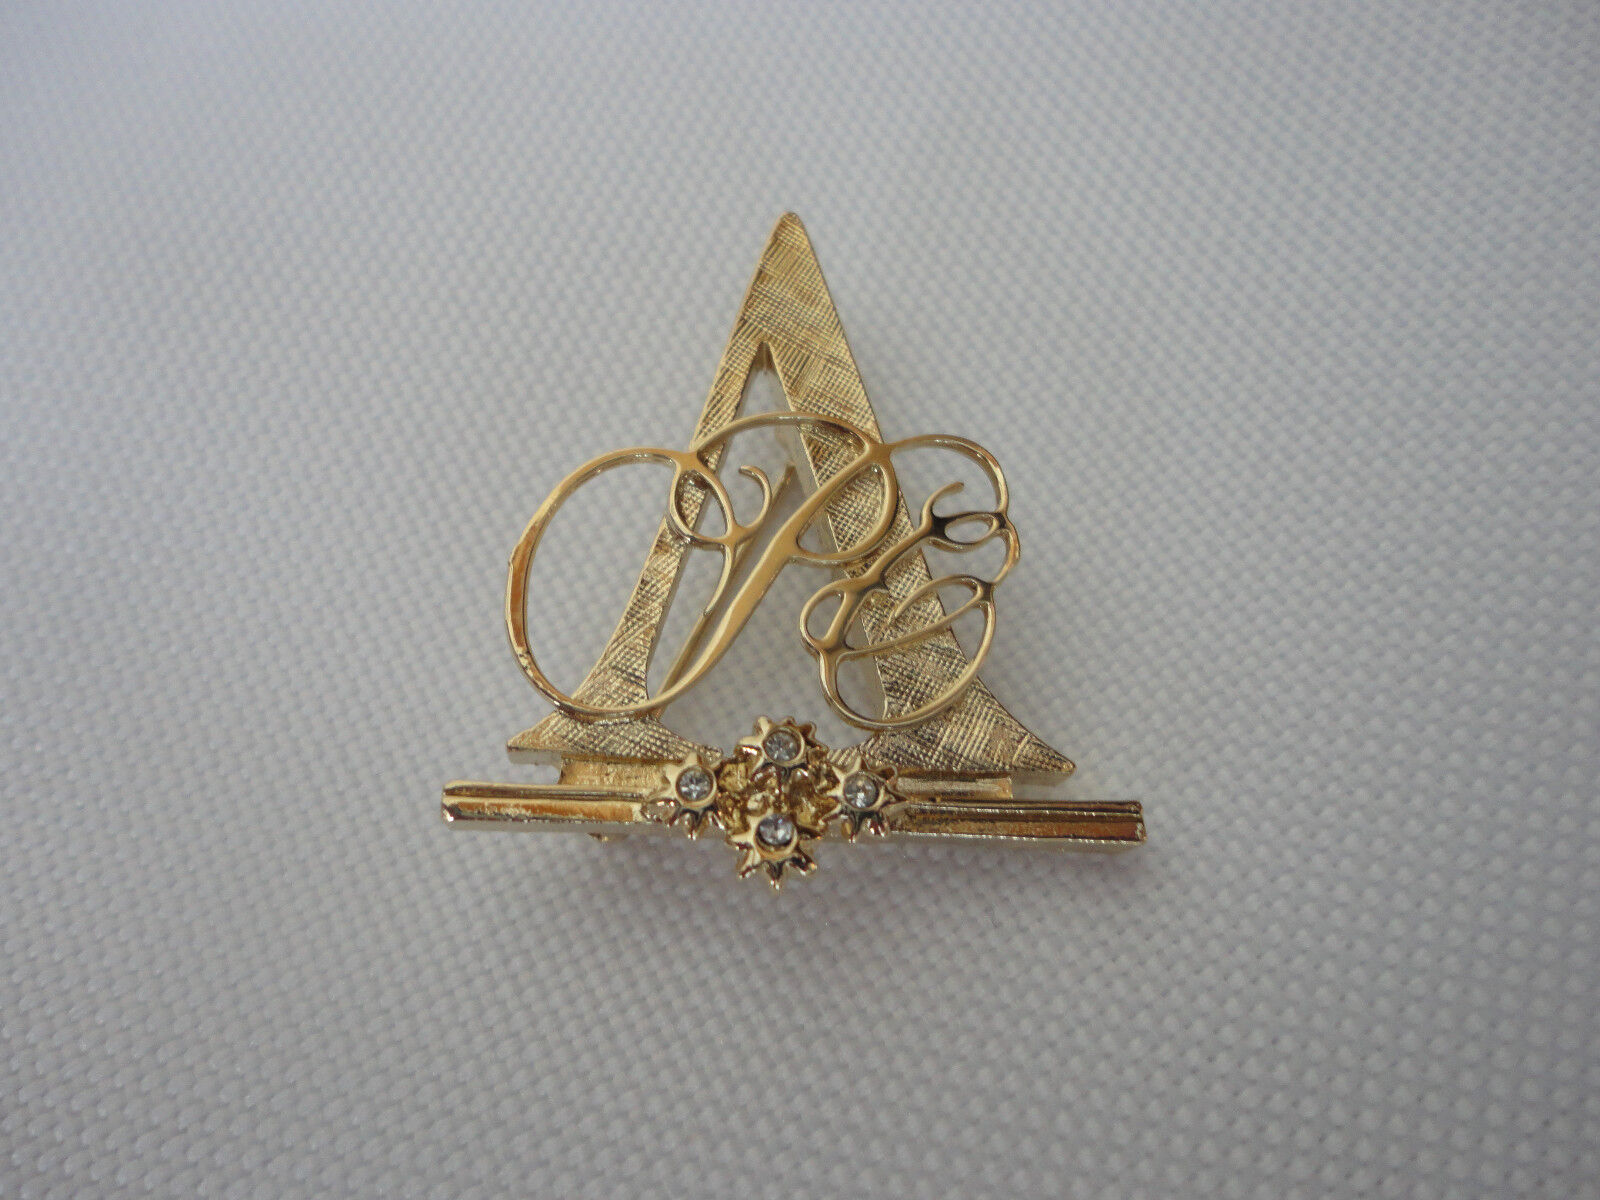 Avon Presidents Club Representative Award Pin